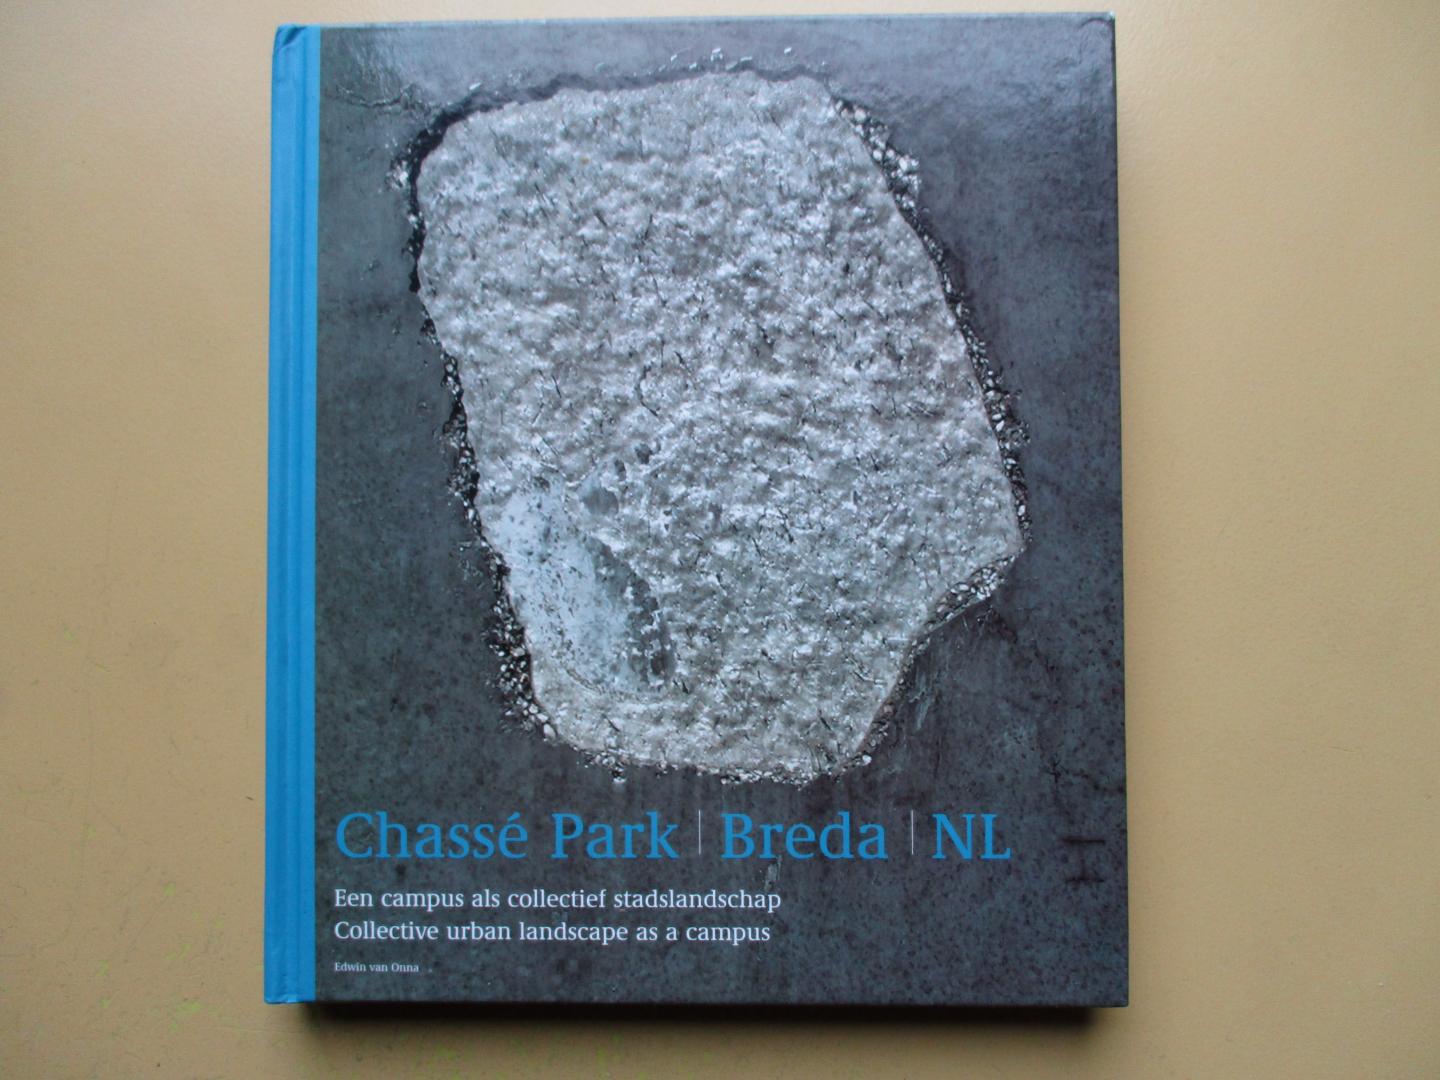 Onna, Edwin van - Chasse Park Breda NL / een campus als collectief stadslandschap = collective urban landscape as a campus